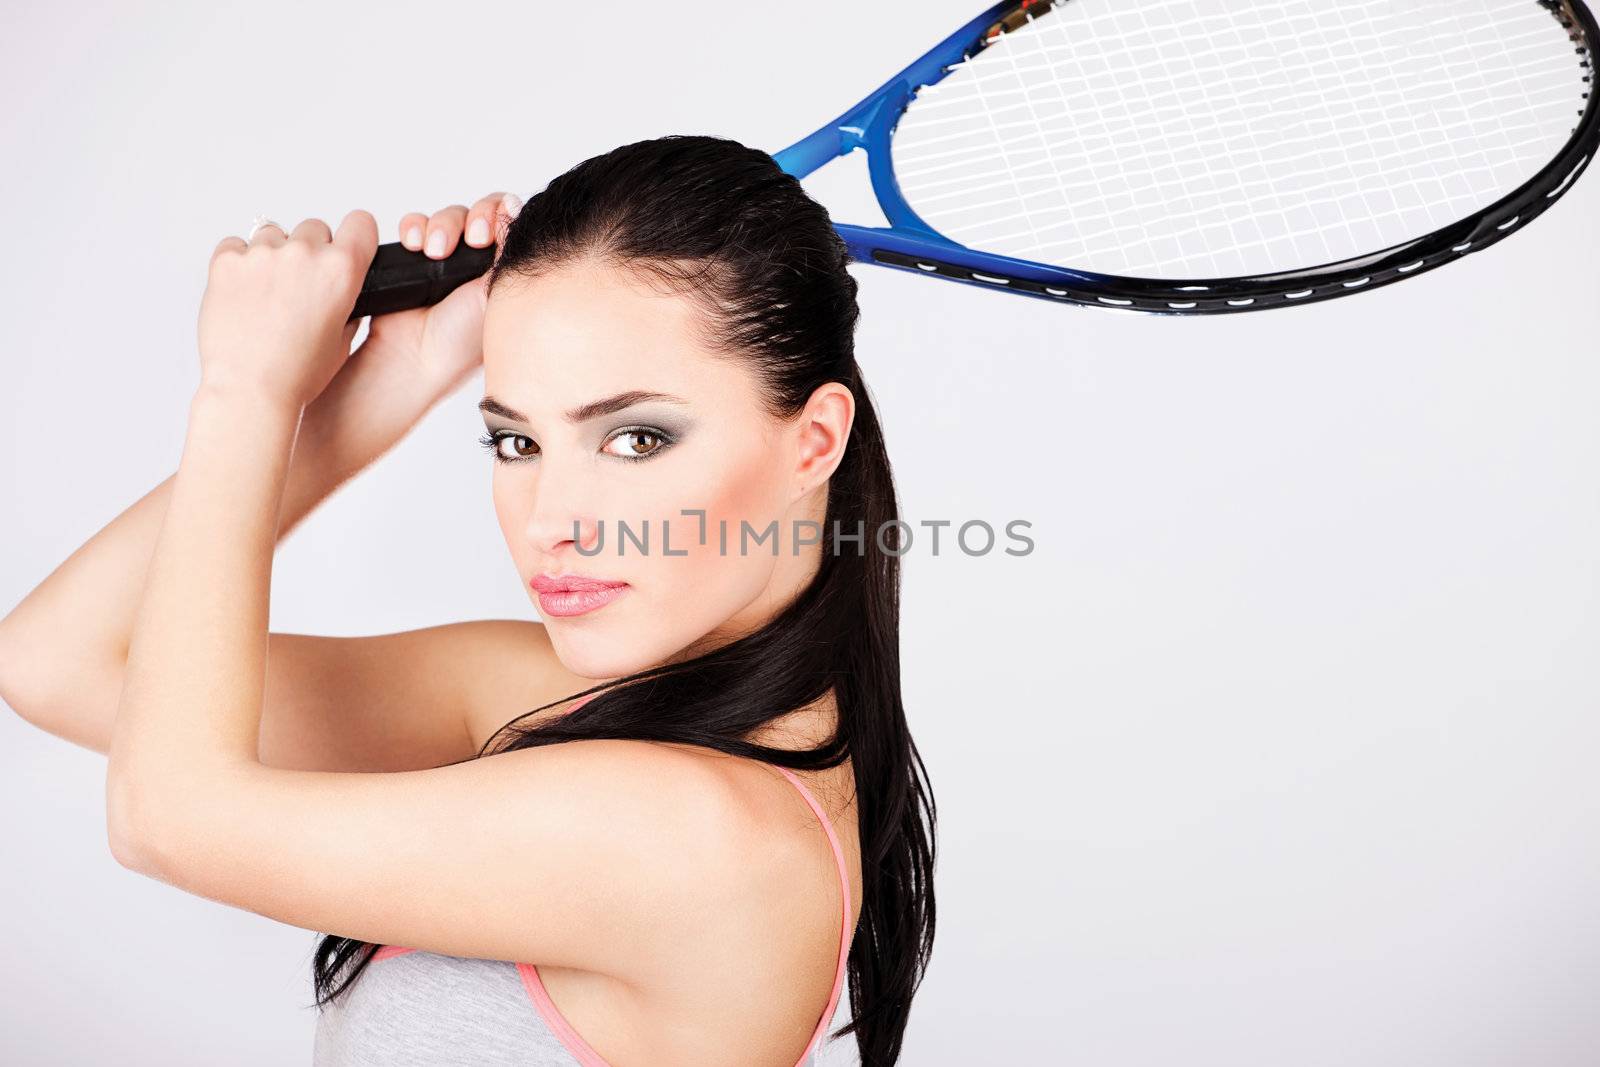 Female tennis player holding racket behind head